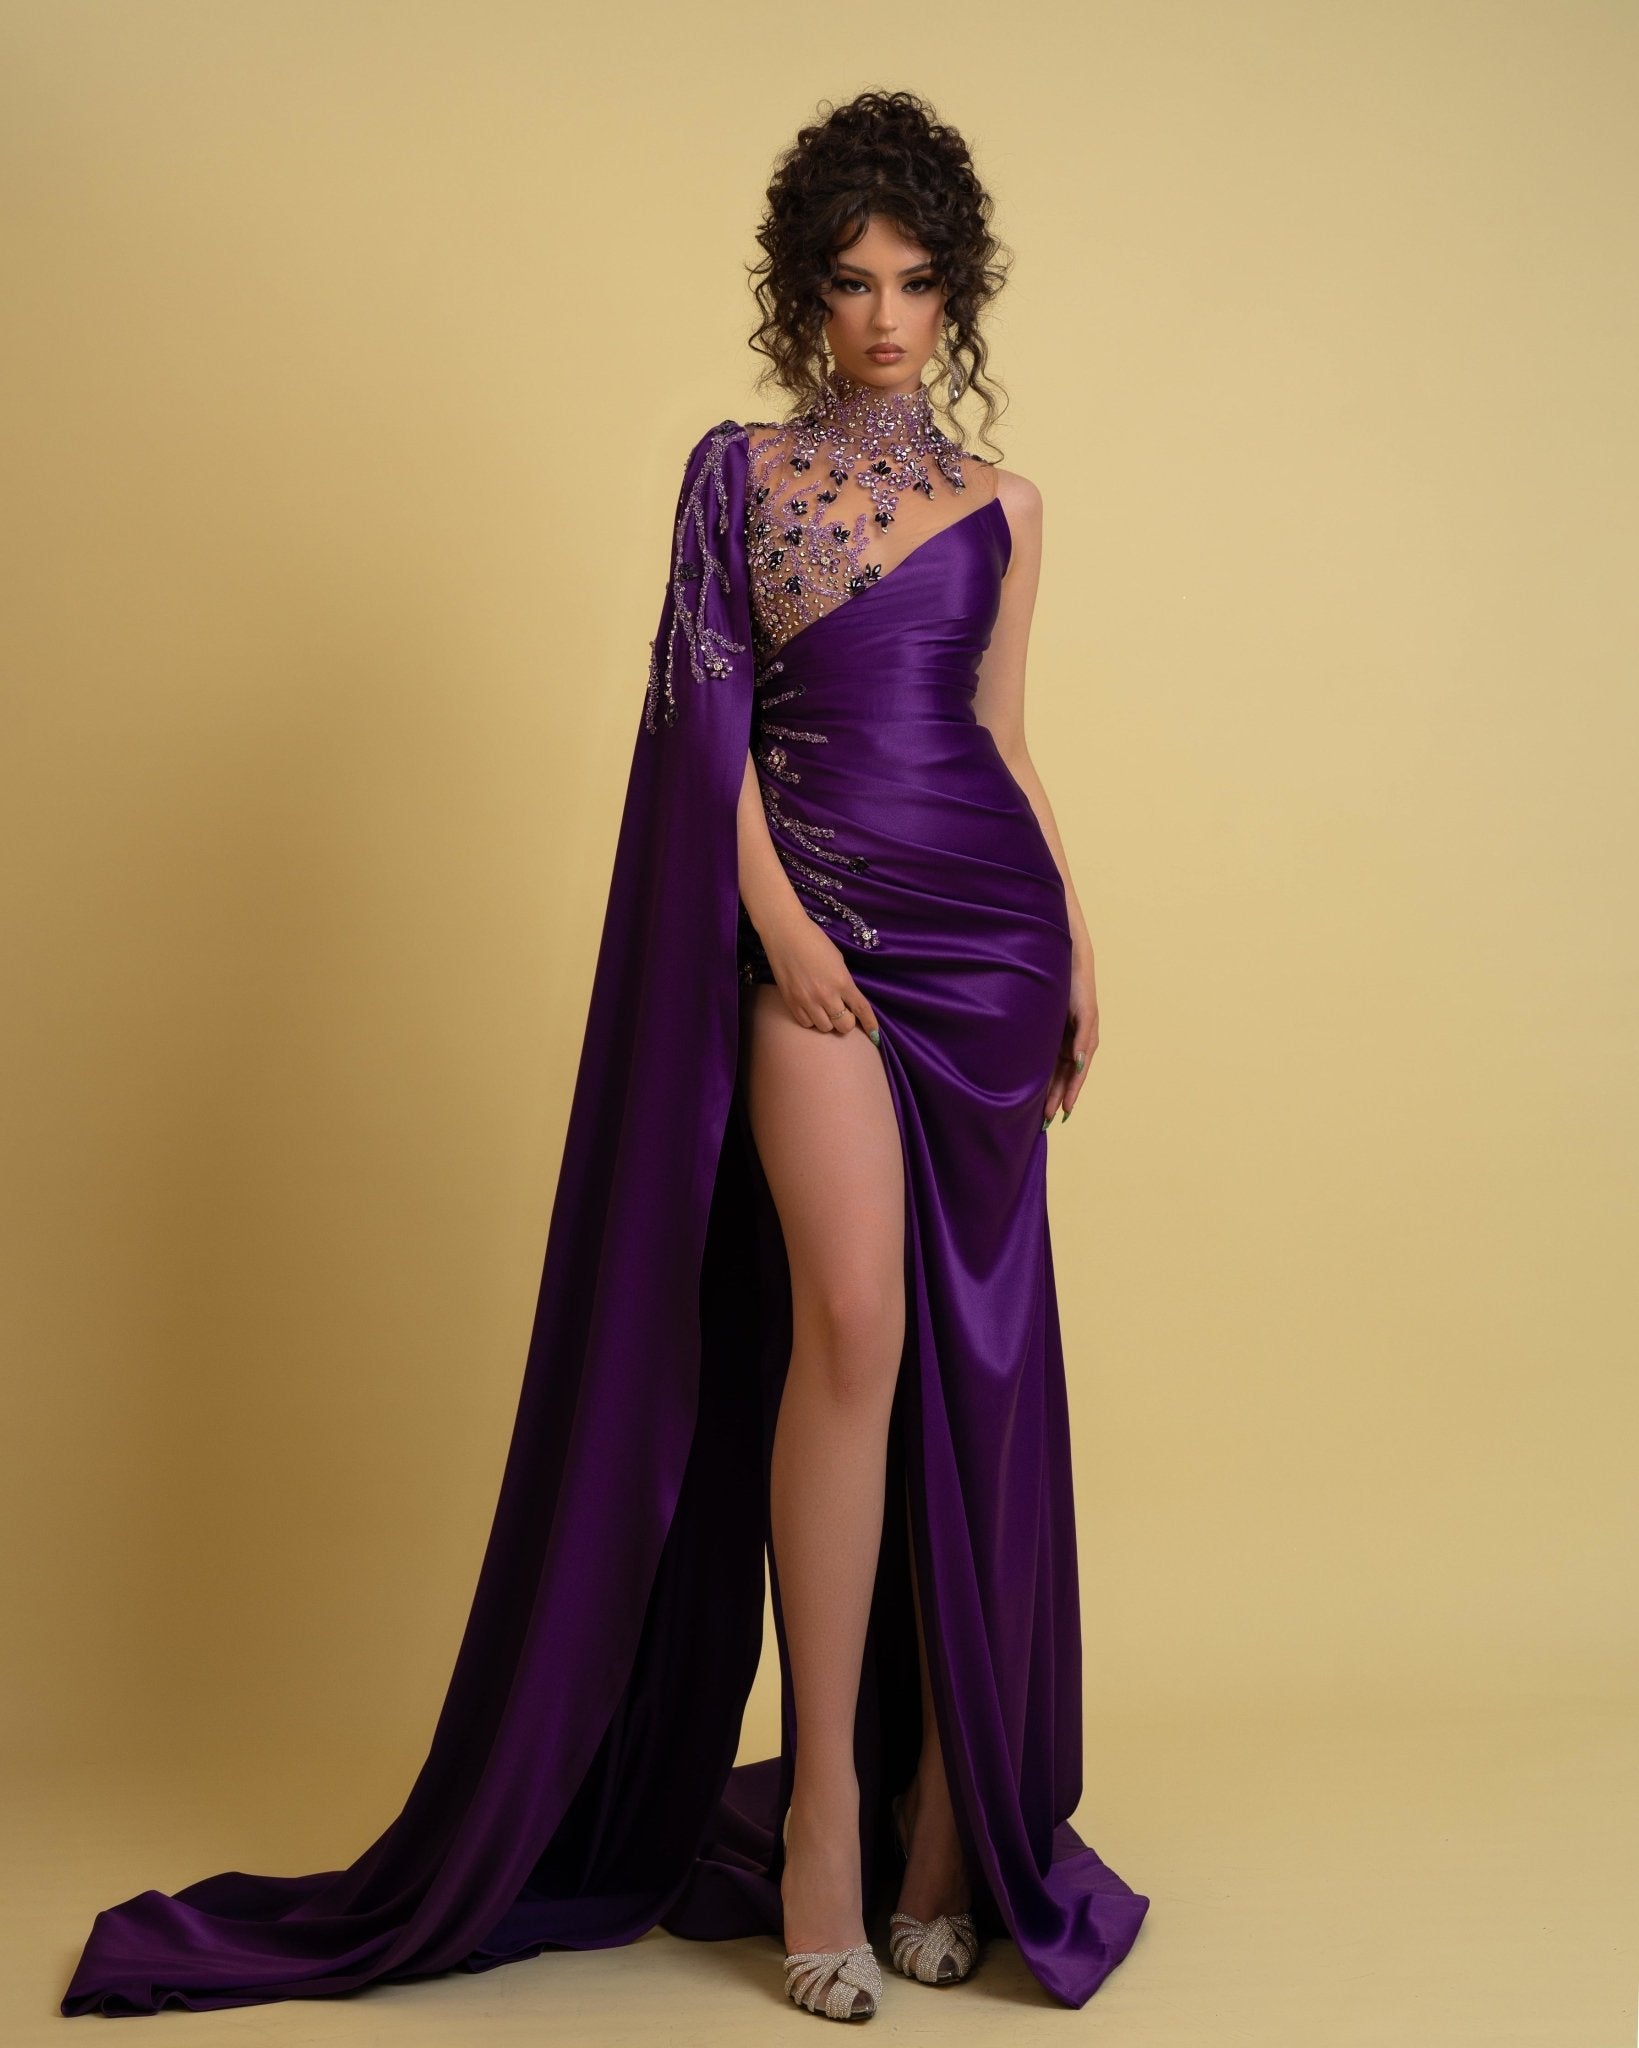 Buy light purple satin spaghetti straps prom dress with beading pockets  online at JJsprom.com